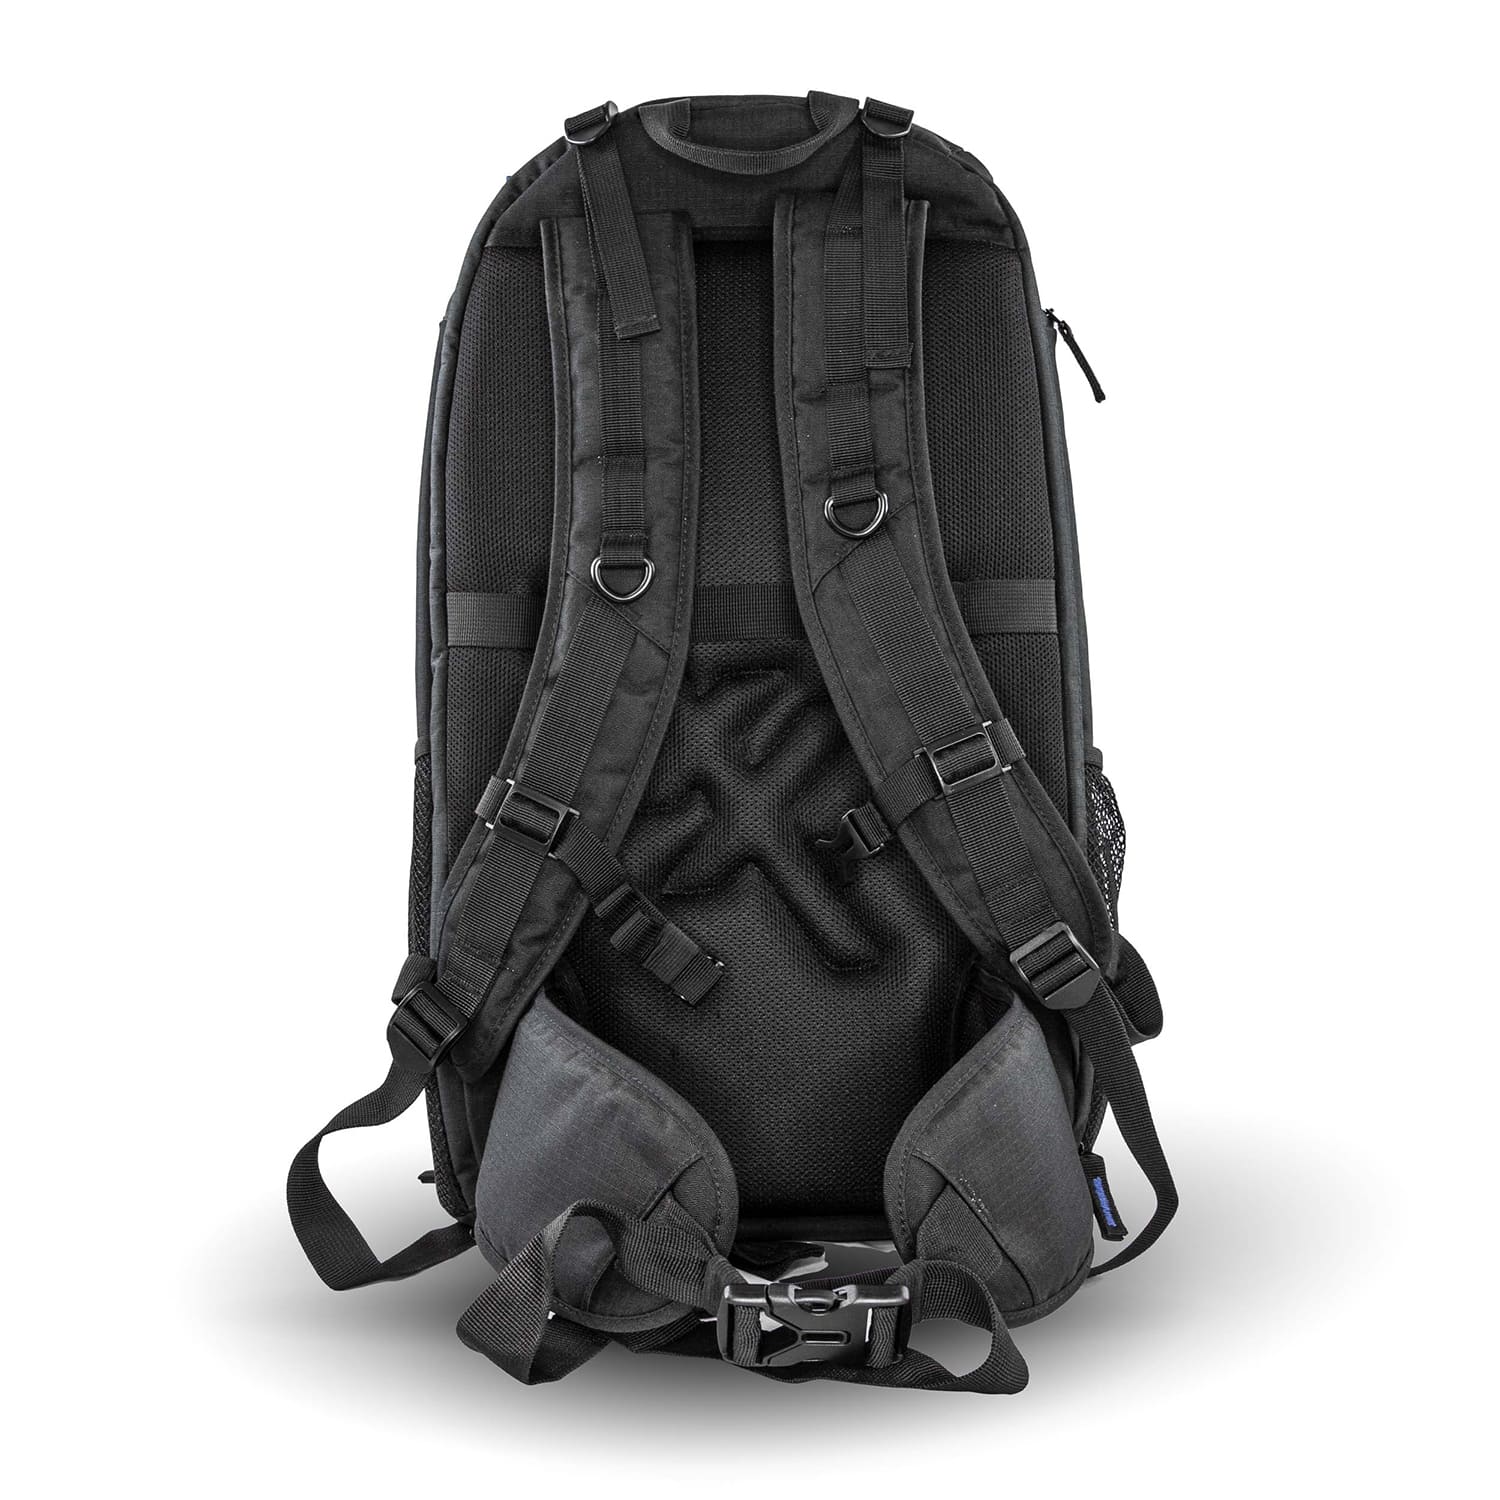 Backpack Pro II for All DJI Phantom Quadcopters - Ultimaxx